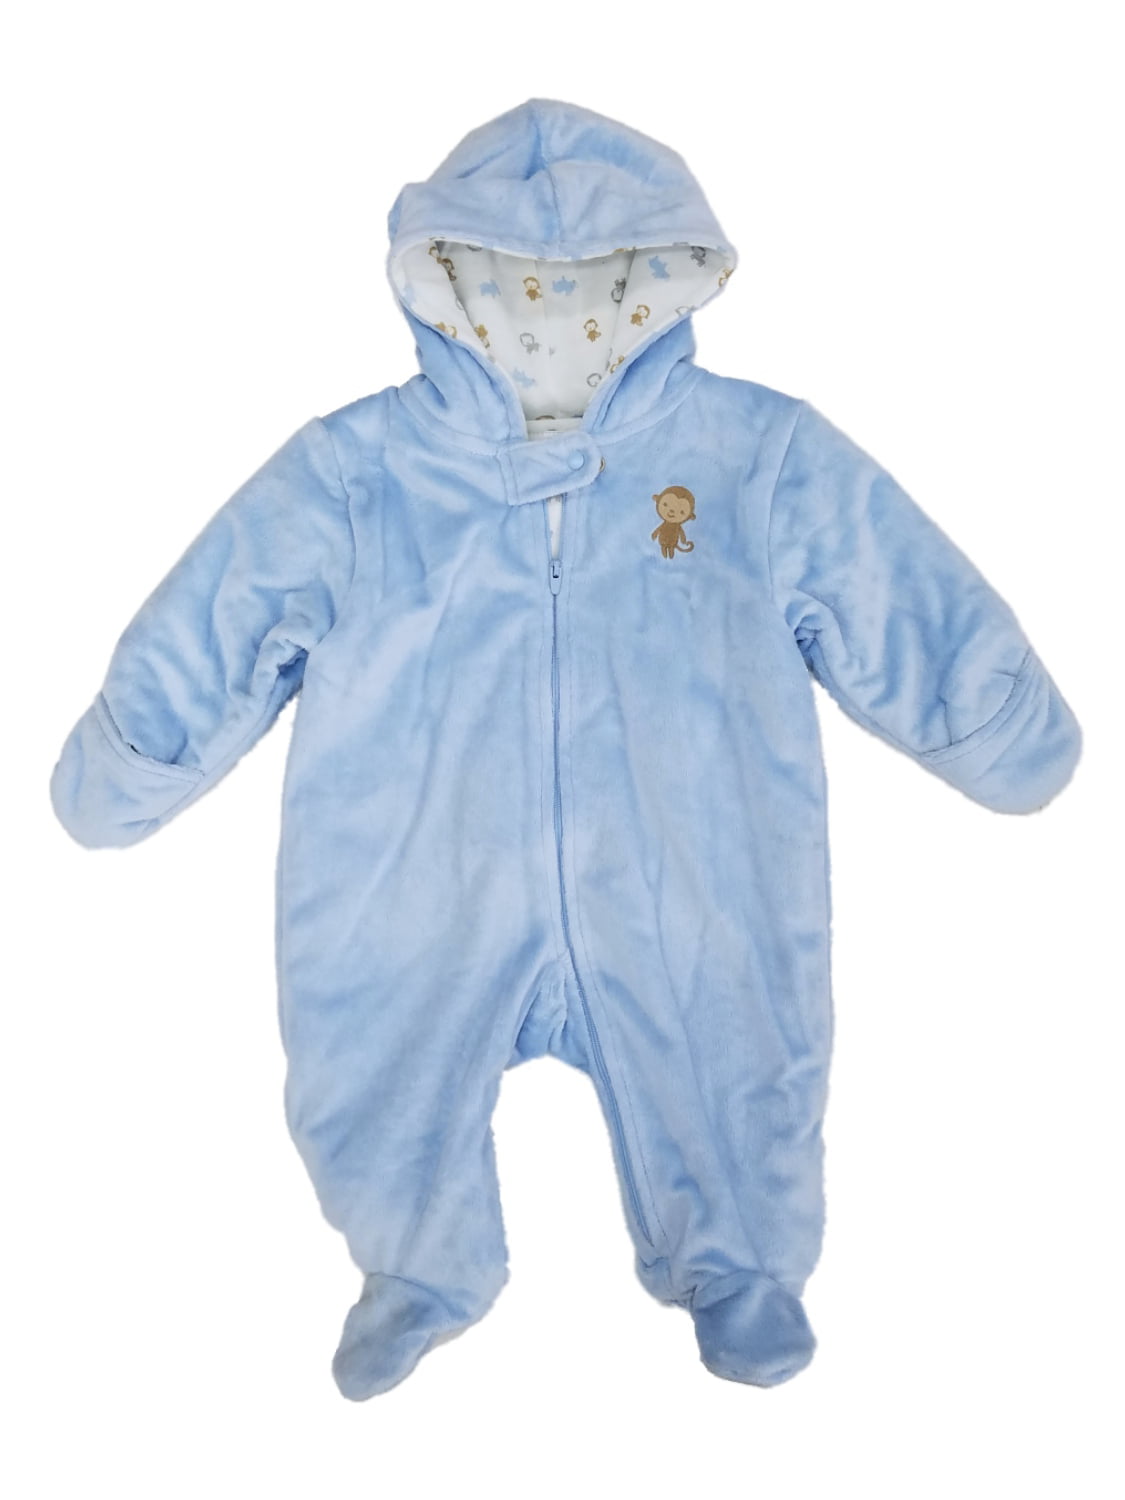 Carter's Carters Infant Boys Blue Plush Monkey Pram Baby Bunting Snowsuit Size 36 Months